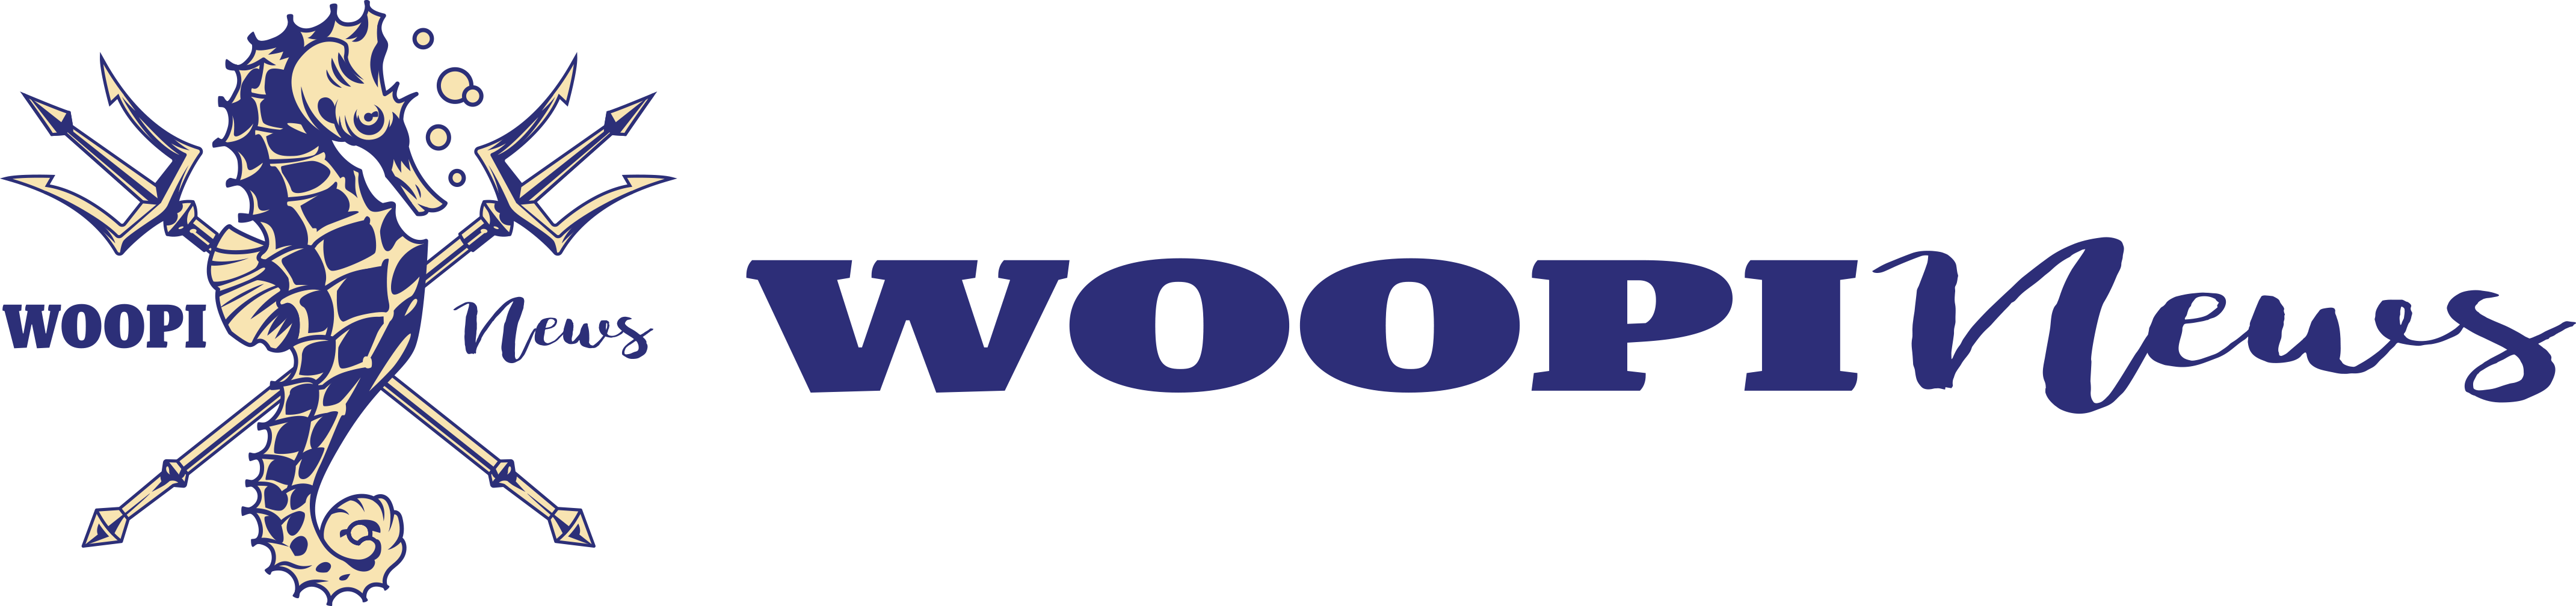 Woopi News Logo